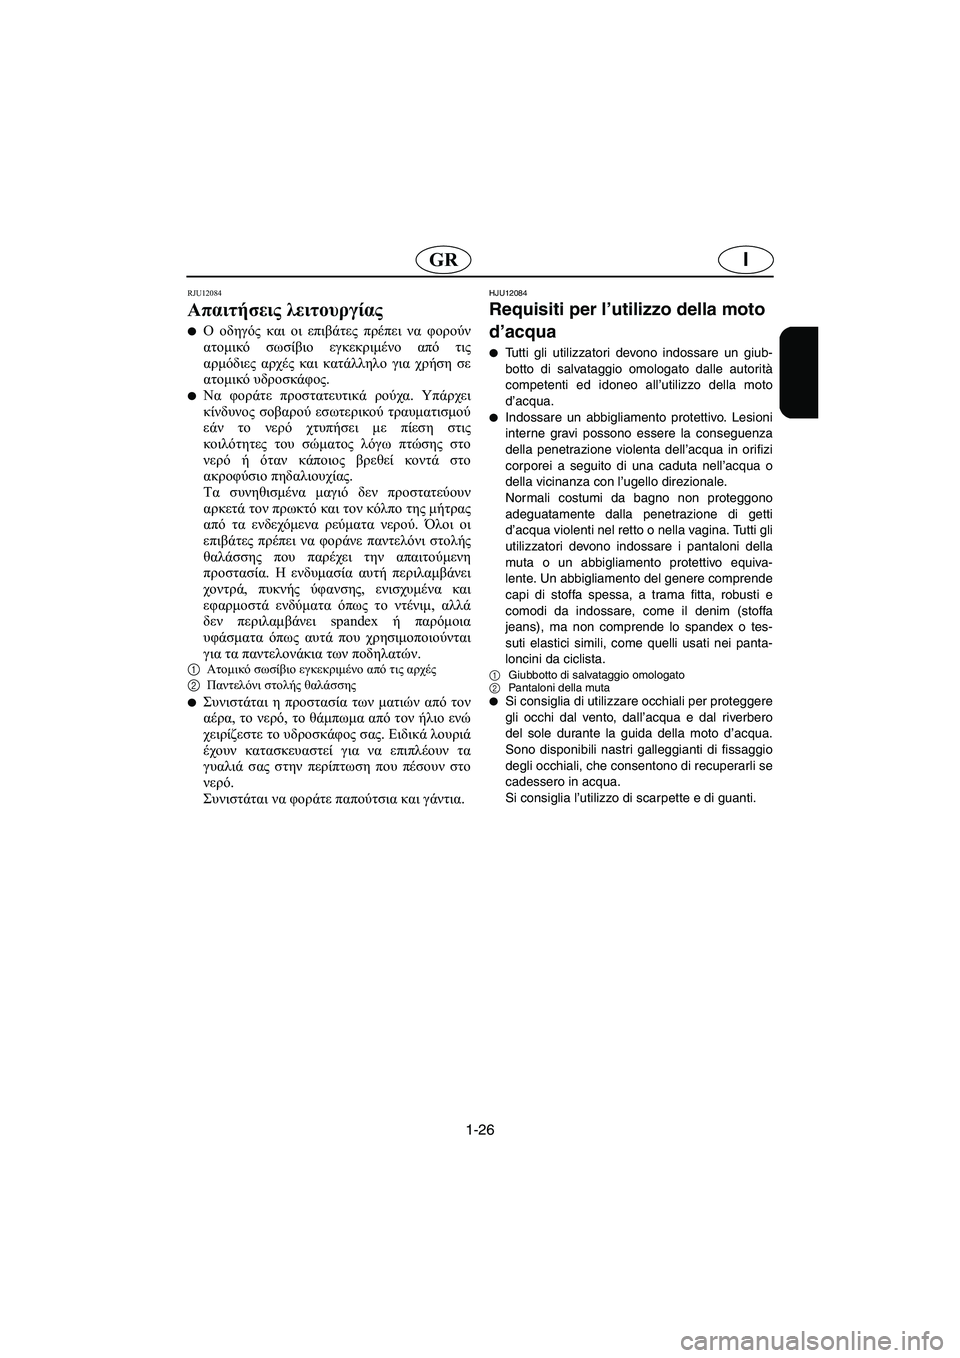 YAMAHA VX 2006  Manual de utilização (in Portuguese) 1-26
IGR
RJU12084
Απαιτήσεις λειτουργίας 
Ο οδηγός και οι επιβάτες πρέπει να φορούν
ατομικό σωσίβιο εγκεκριμένο από 